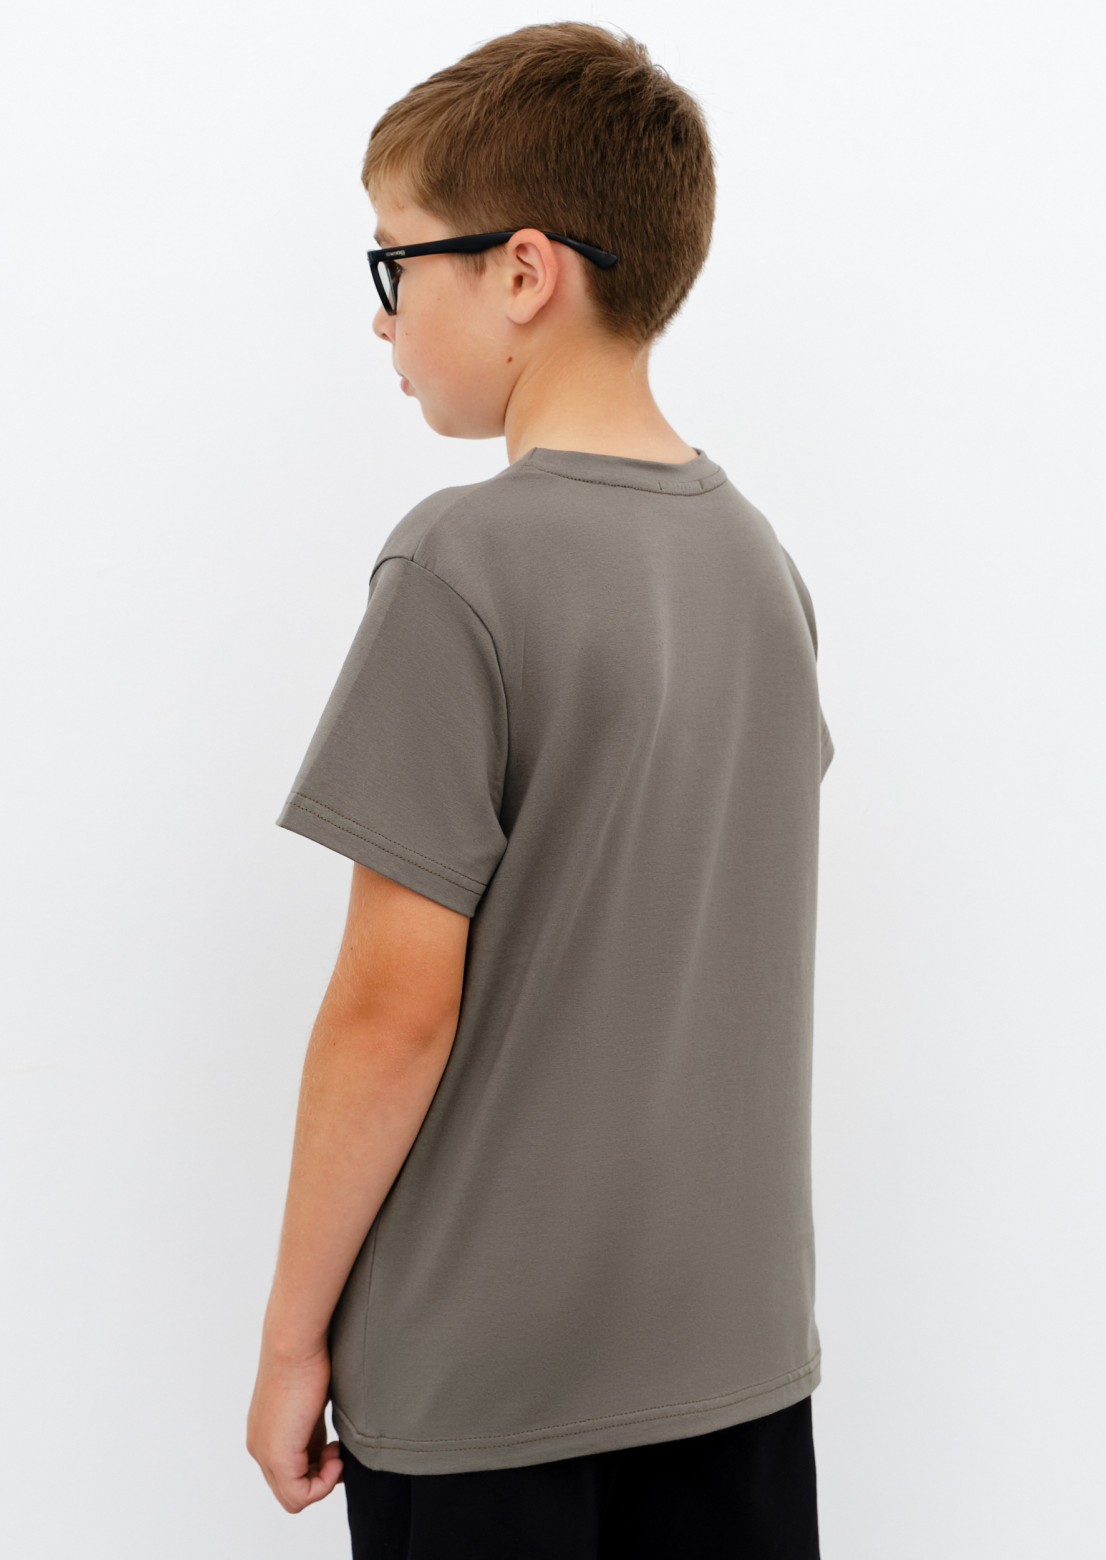 Children's khaki T-shirt with print "20XX KID"